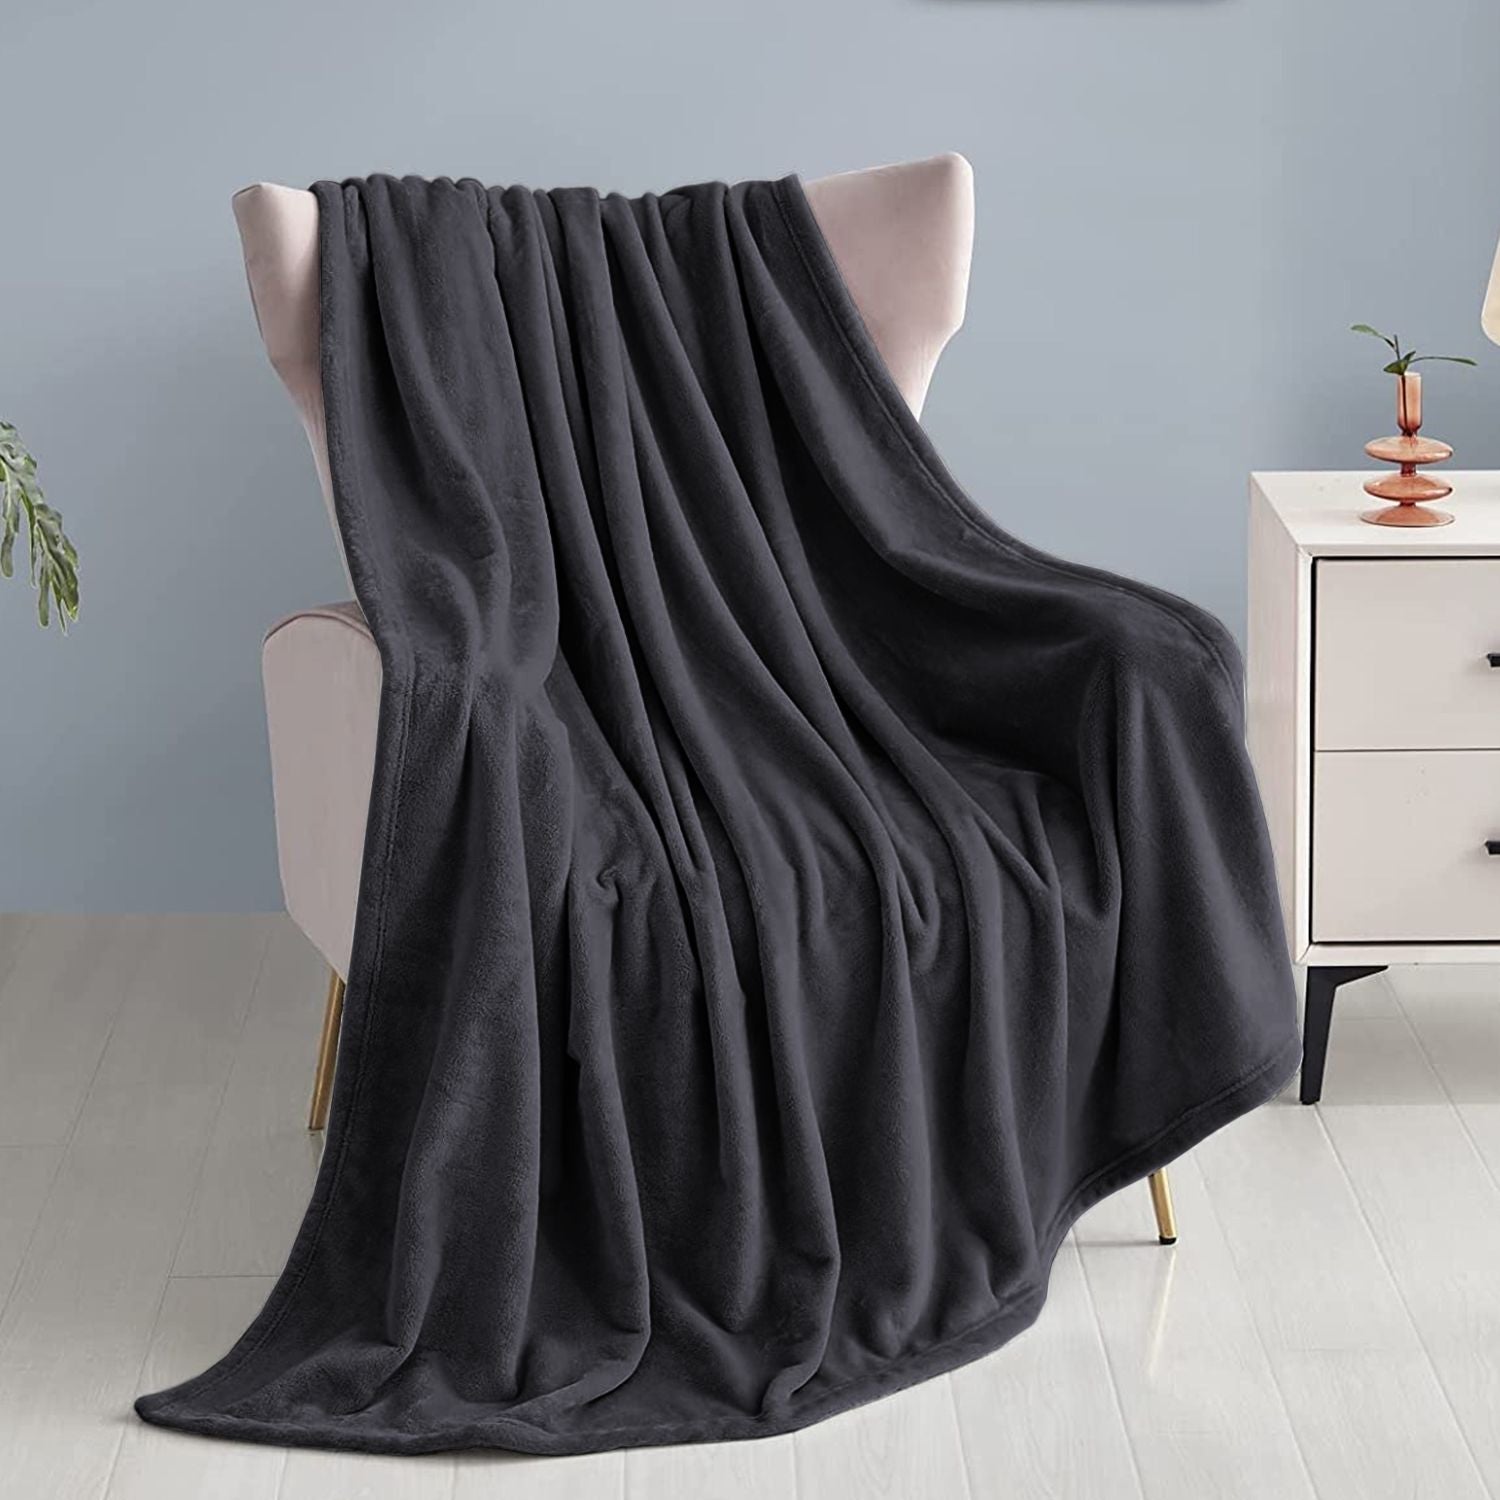 Fluffy Mink Fleece Throw Blanket - Black